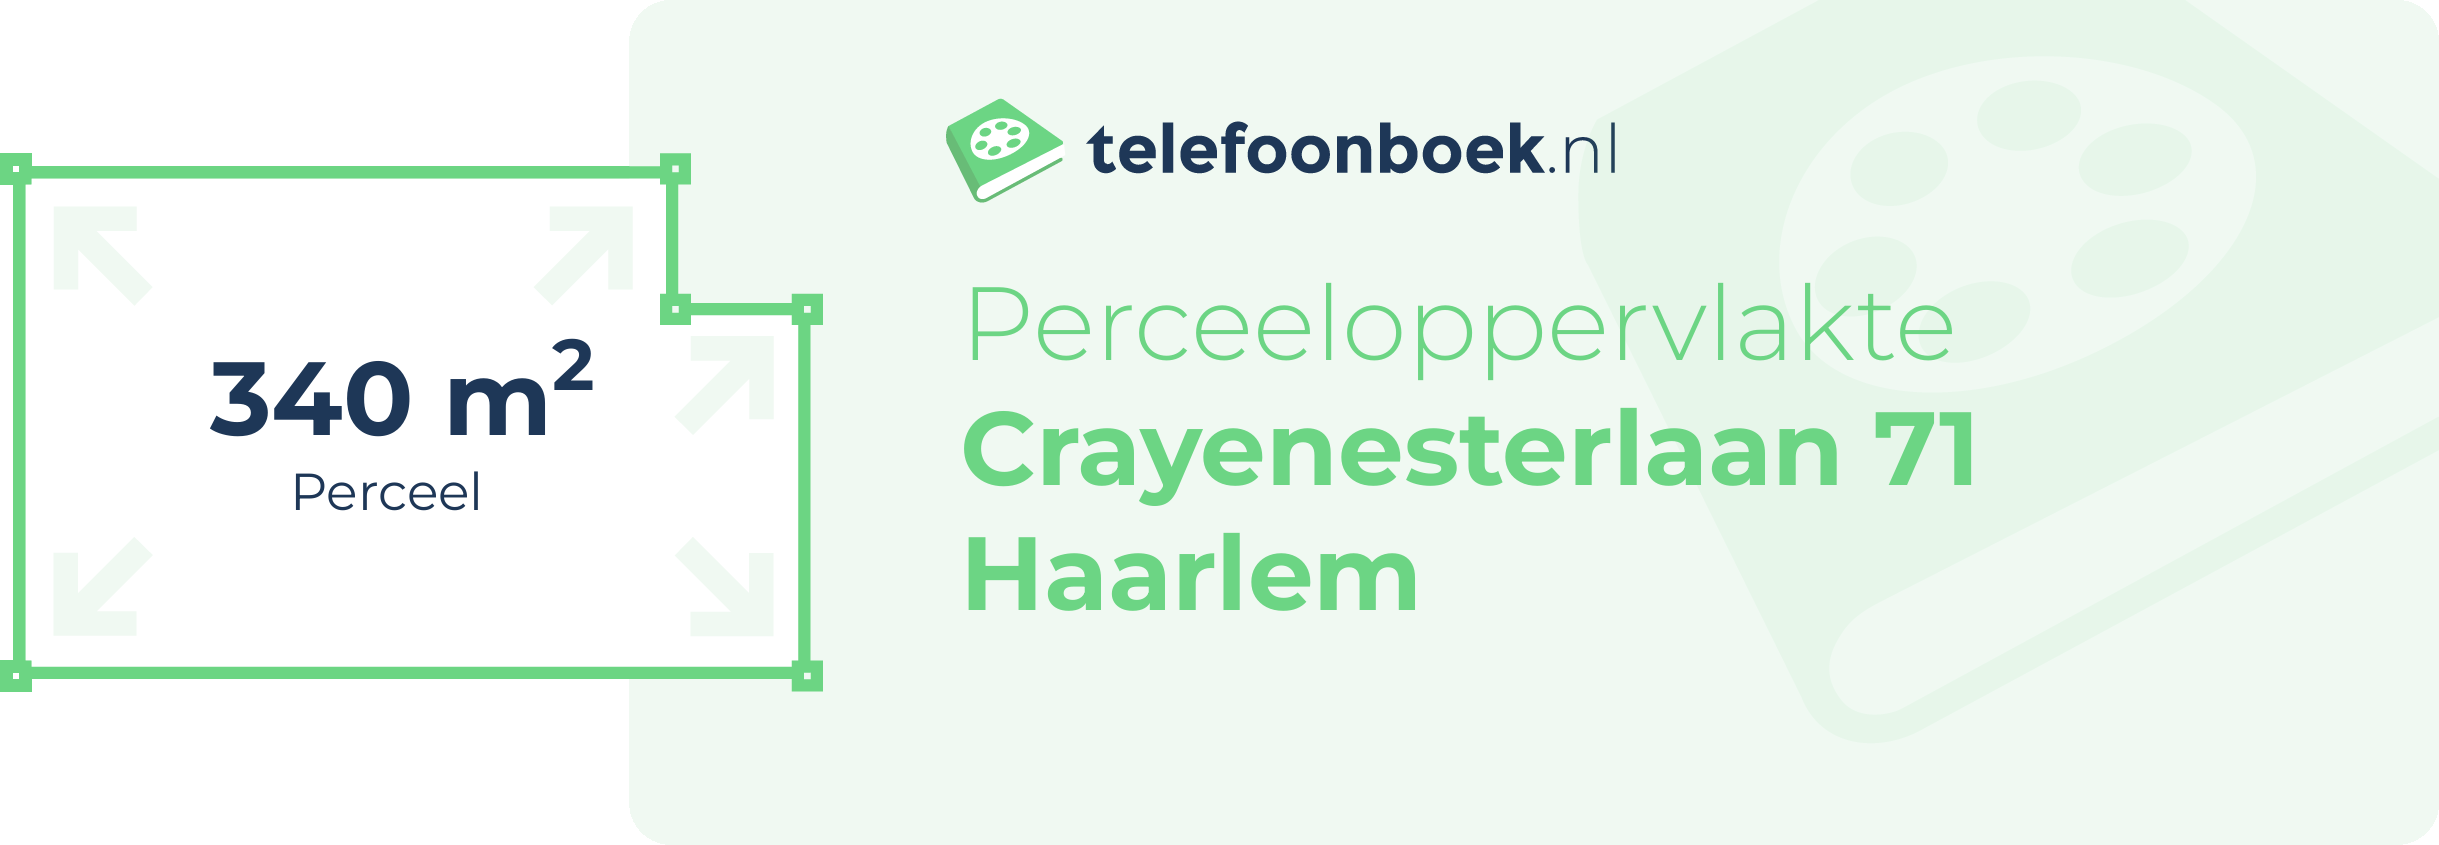 Perceeloppervlakte Crayenesterlaan 71 Haarlem